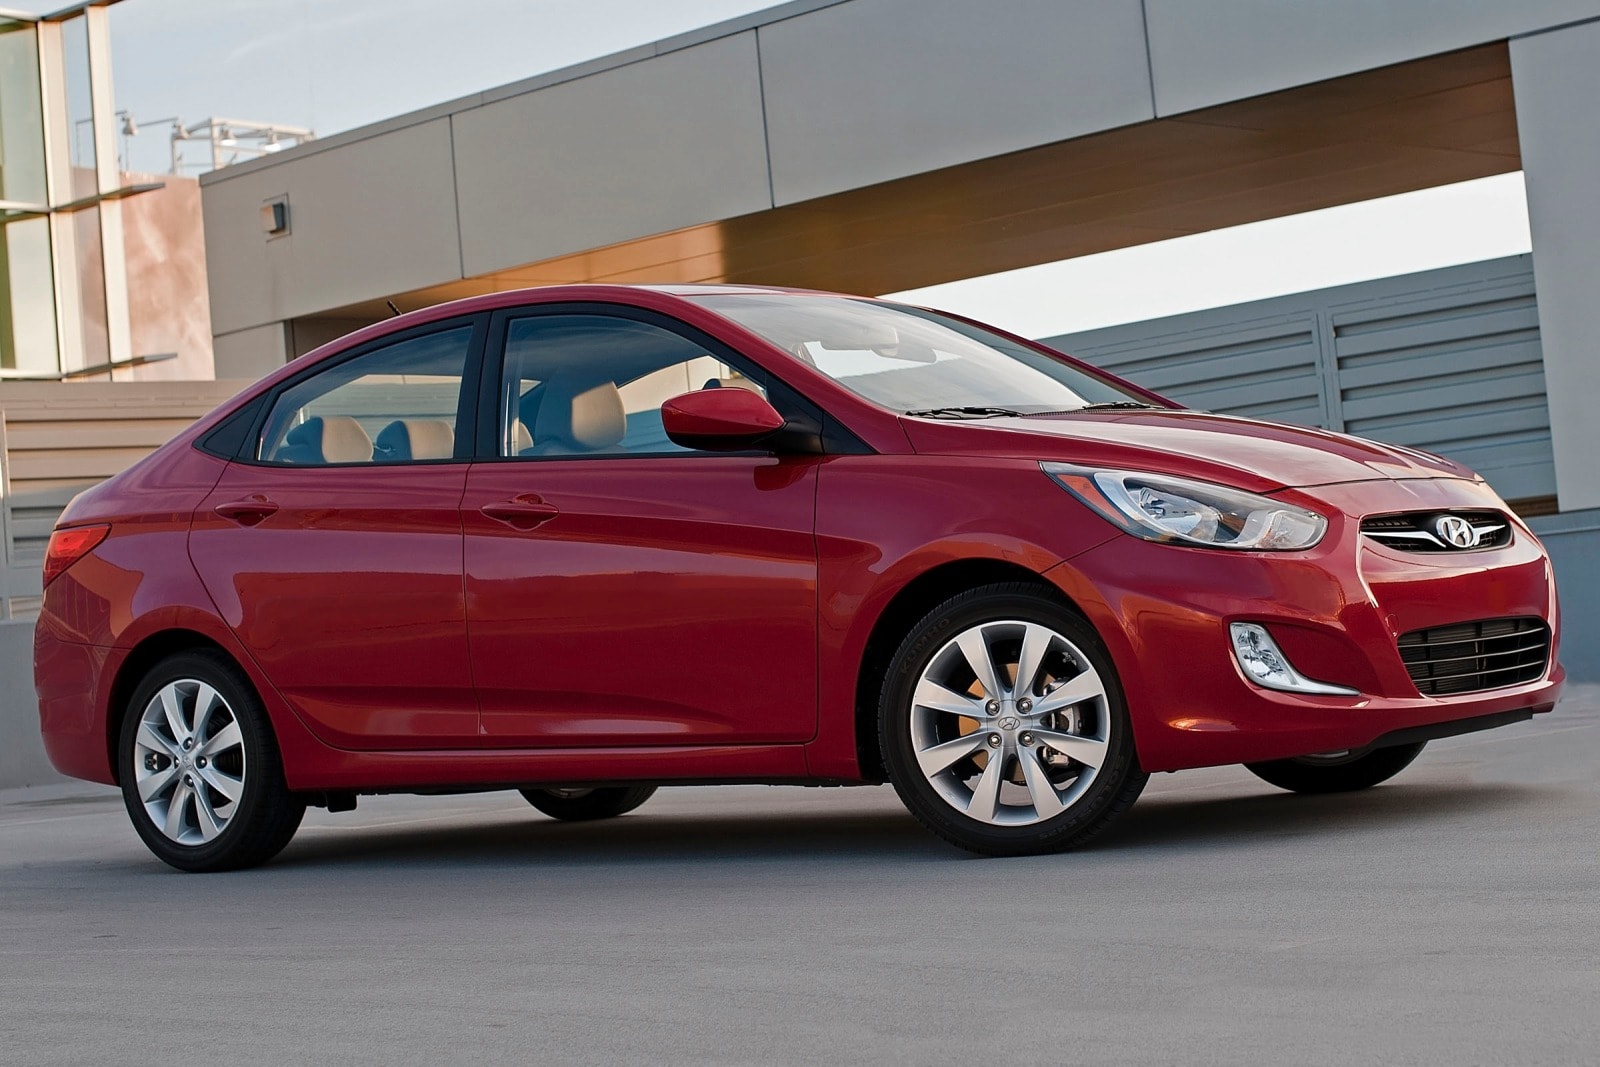 Used 2012 Hyundai Accent Sedan Review | Edmunds